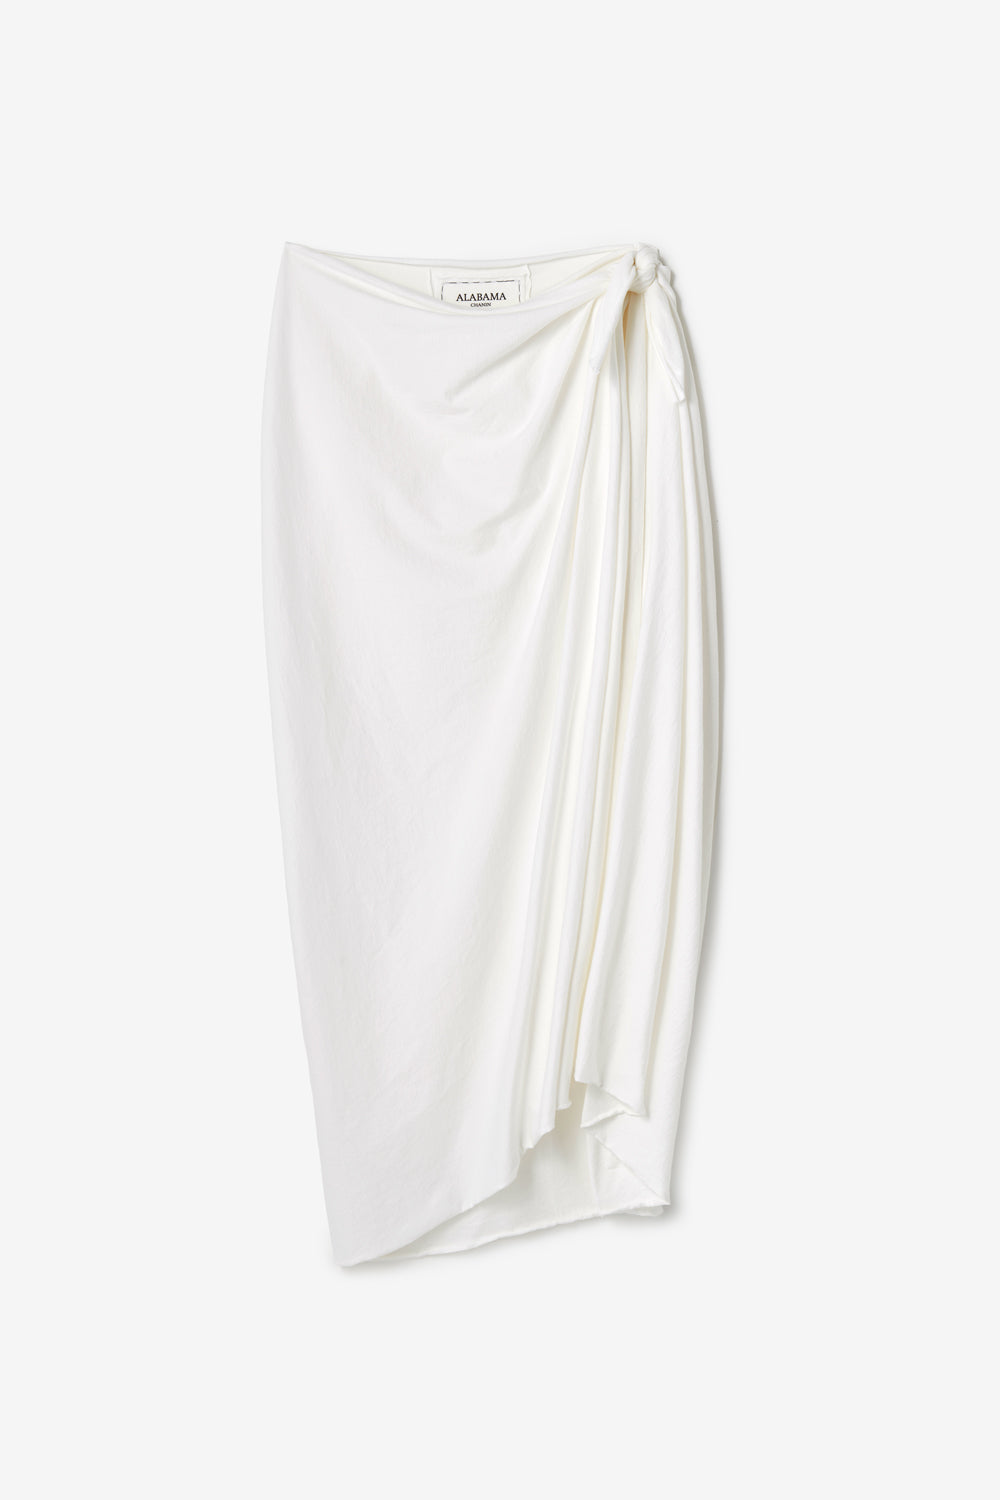 Organic cotton jersey sarong in white.